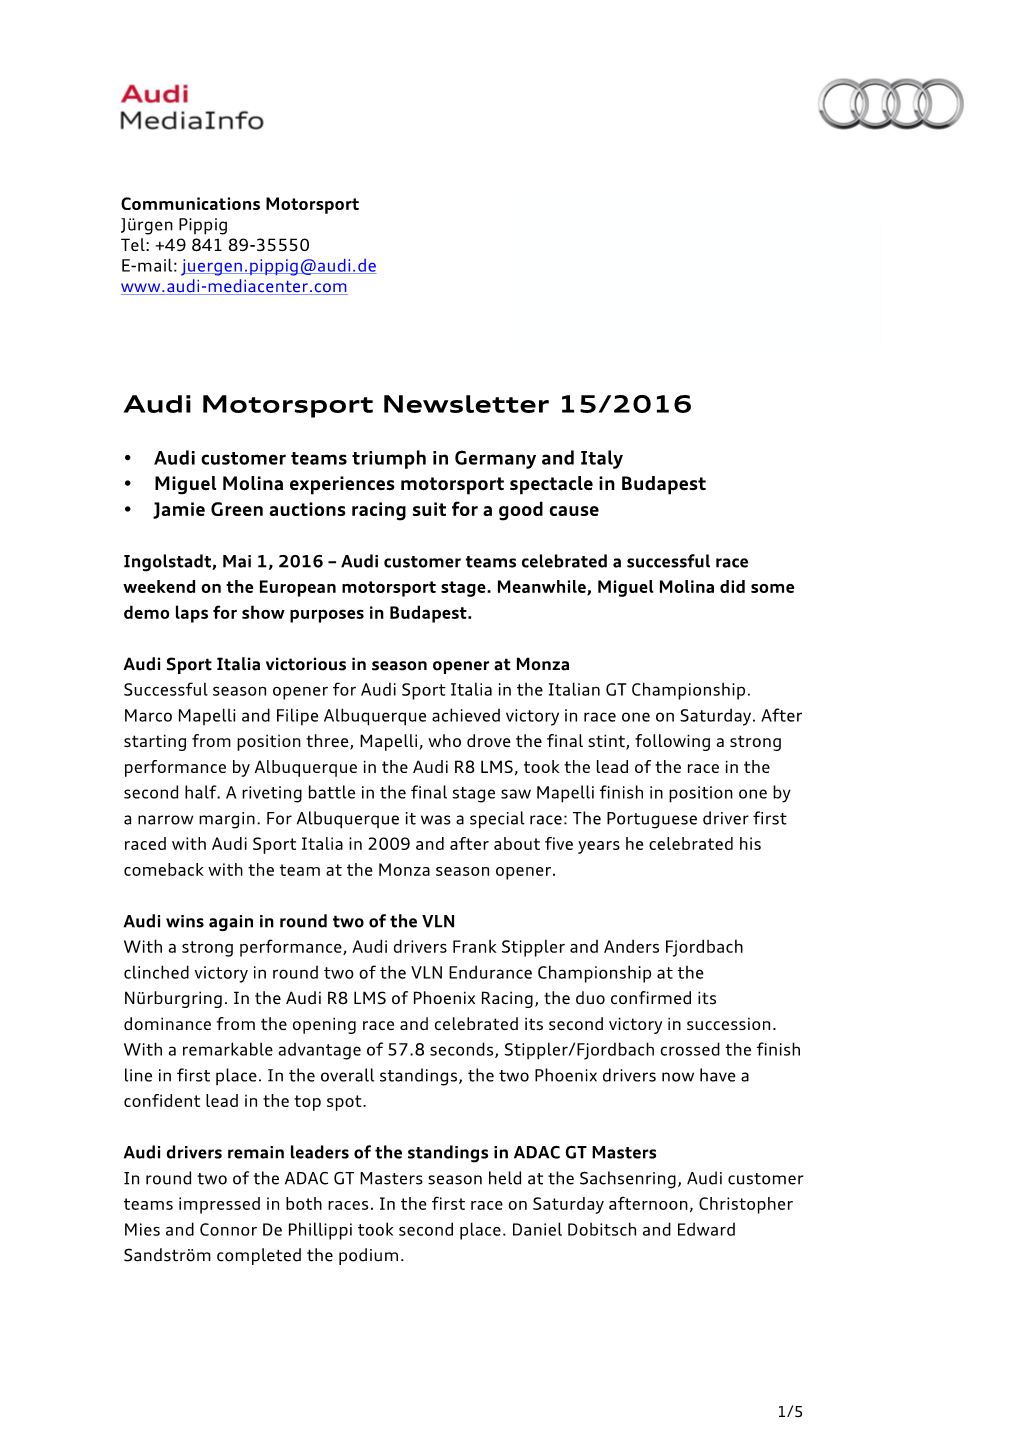 Audi Motorsport Newsletter 15/2016